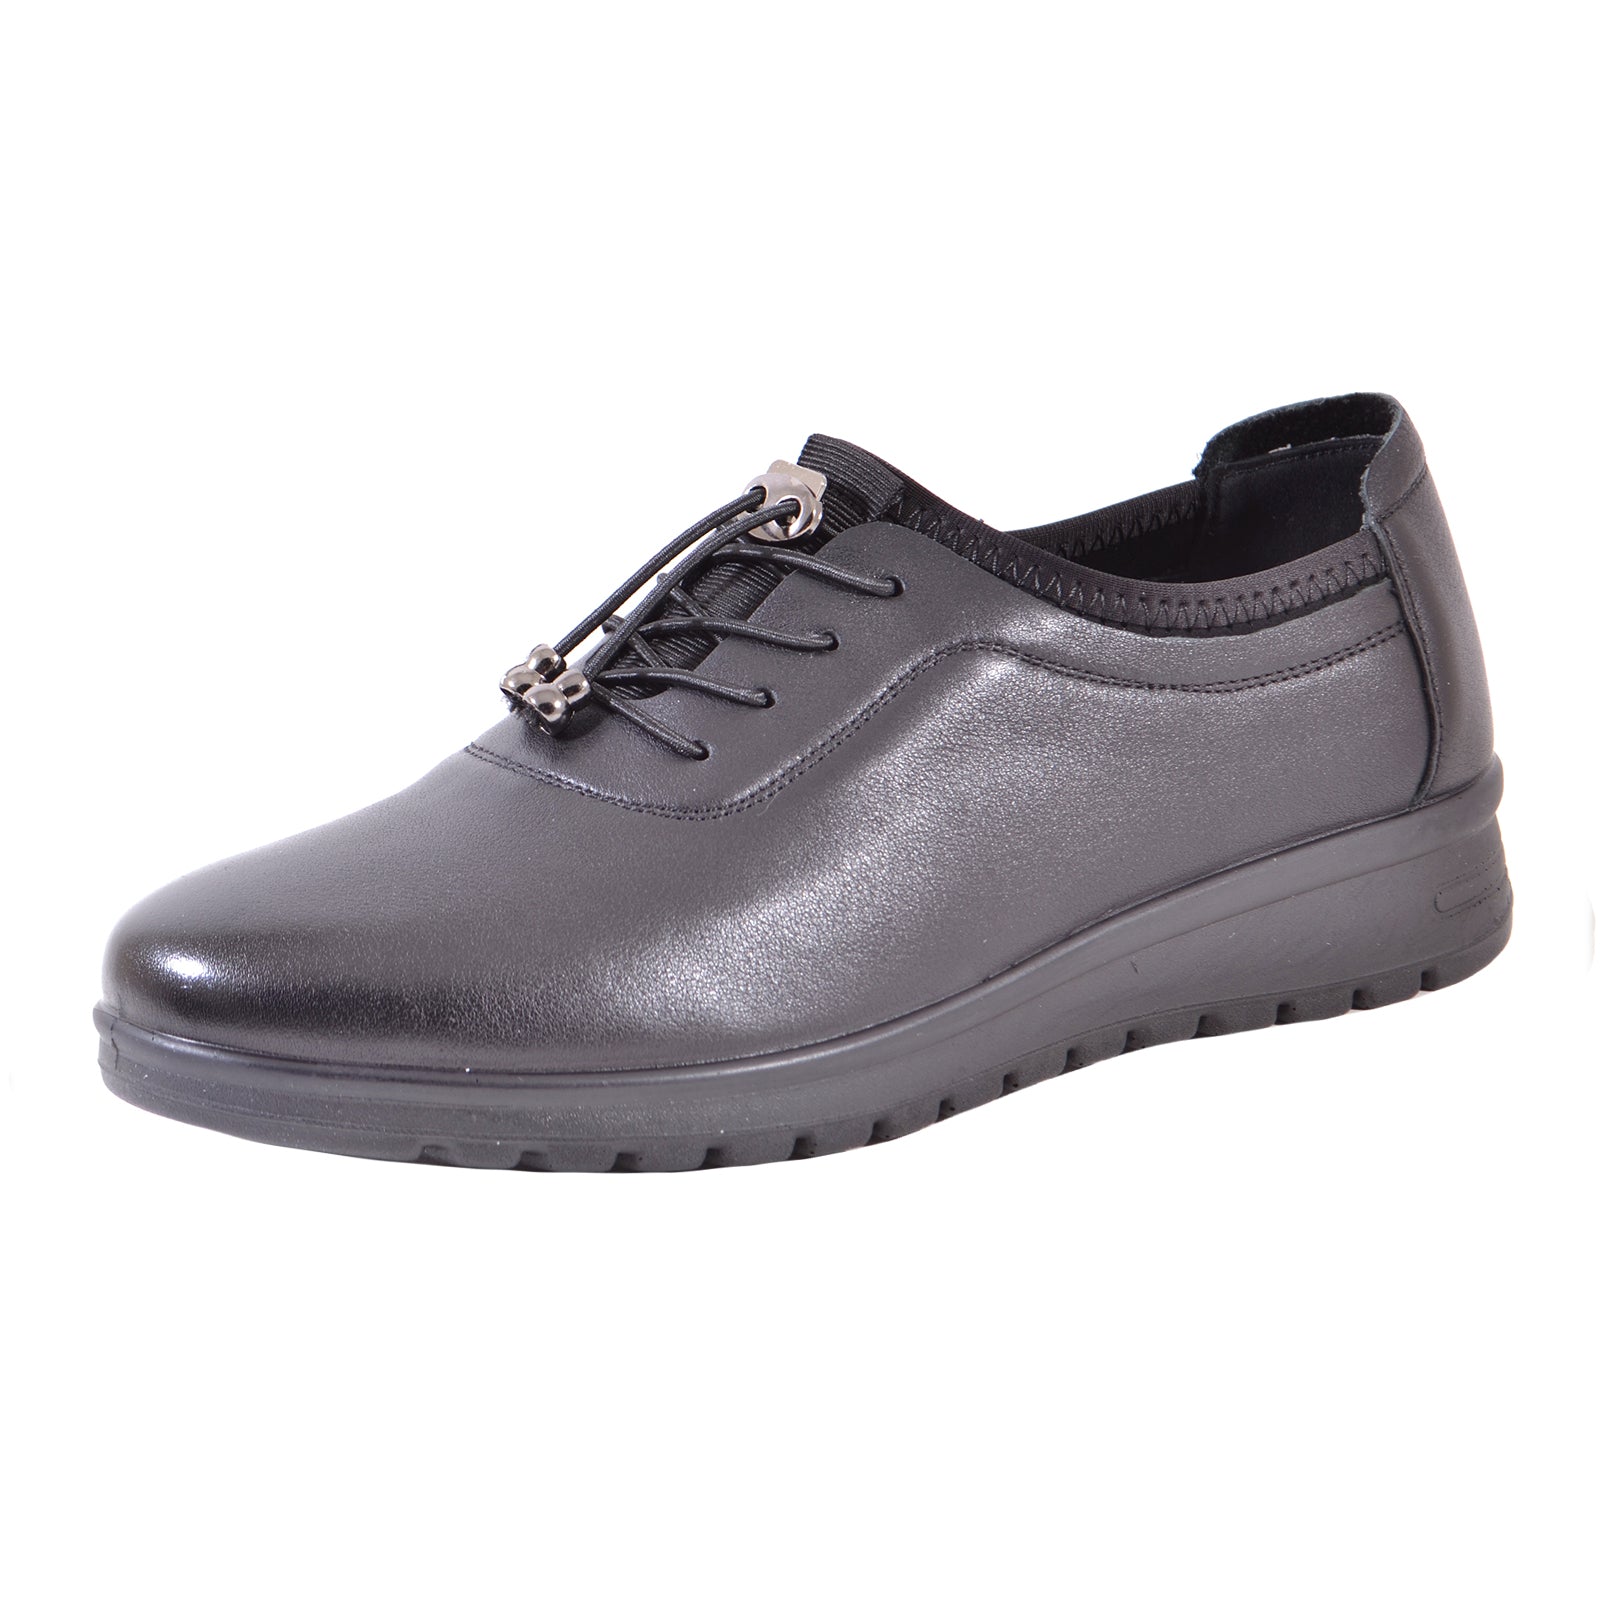 Pantofi Formazione N015 Black